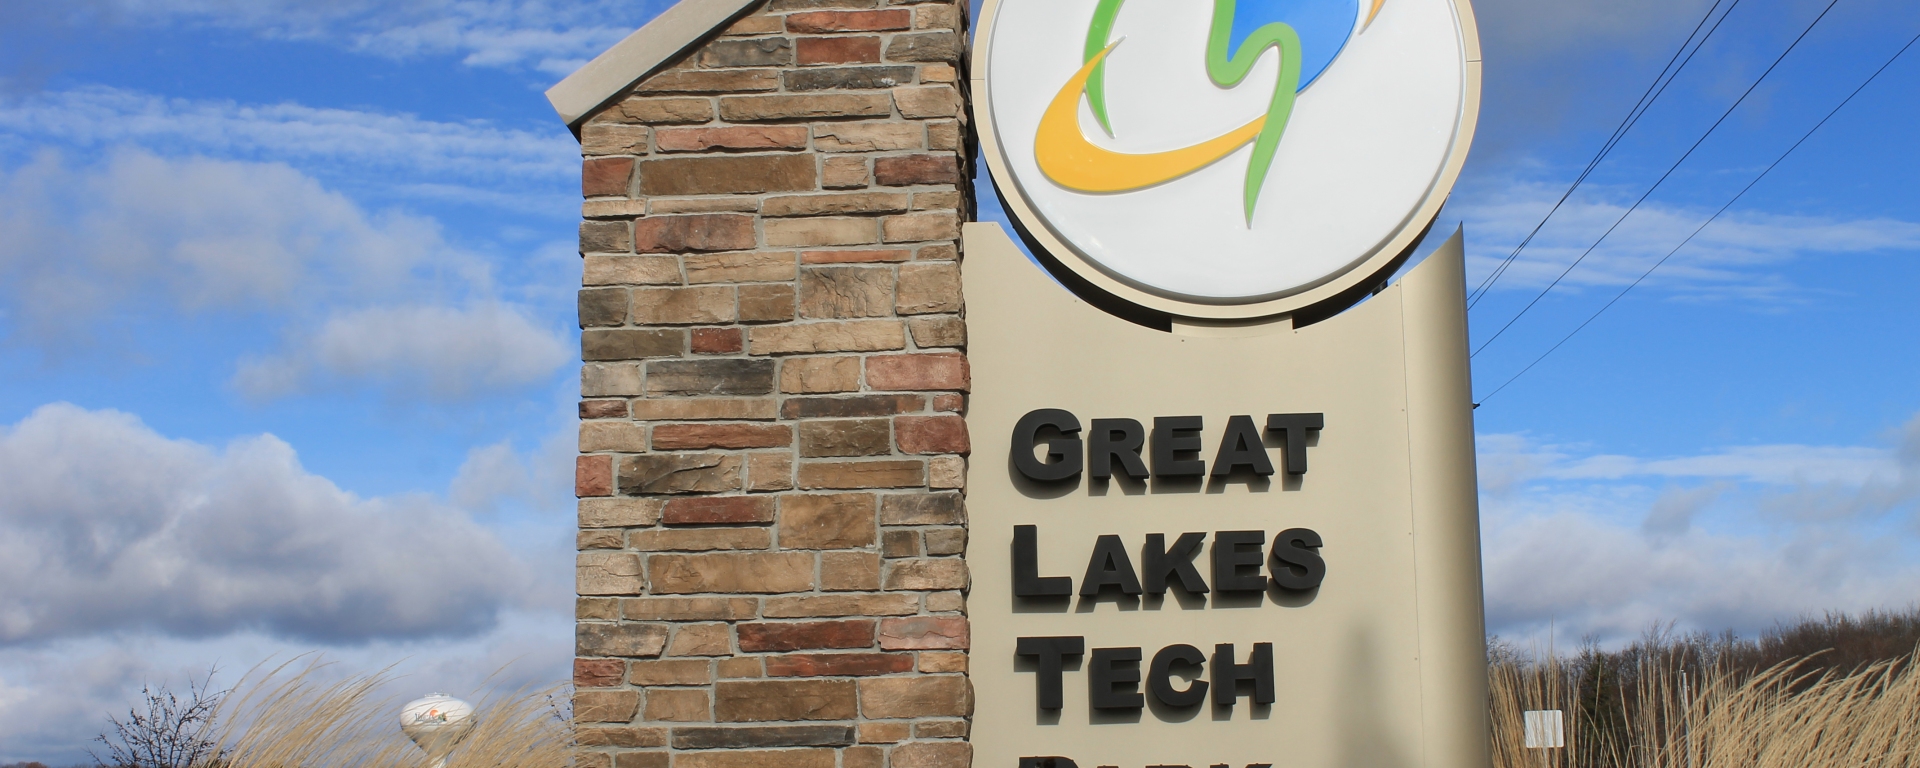 Great Lakes Tech Park